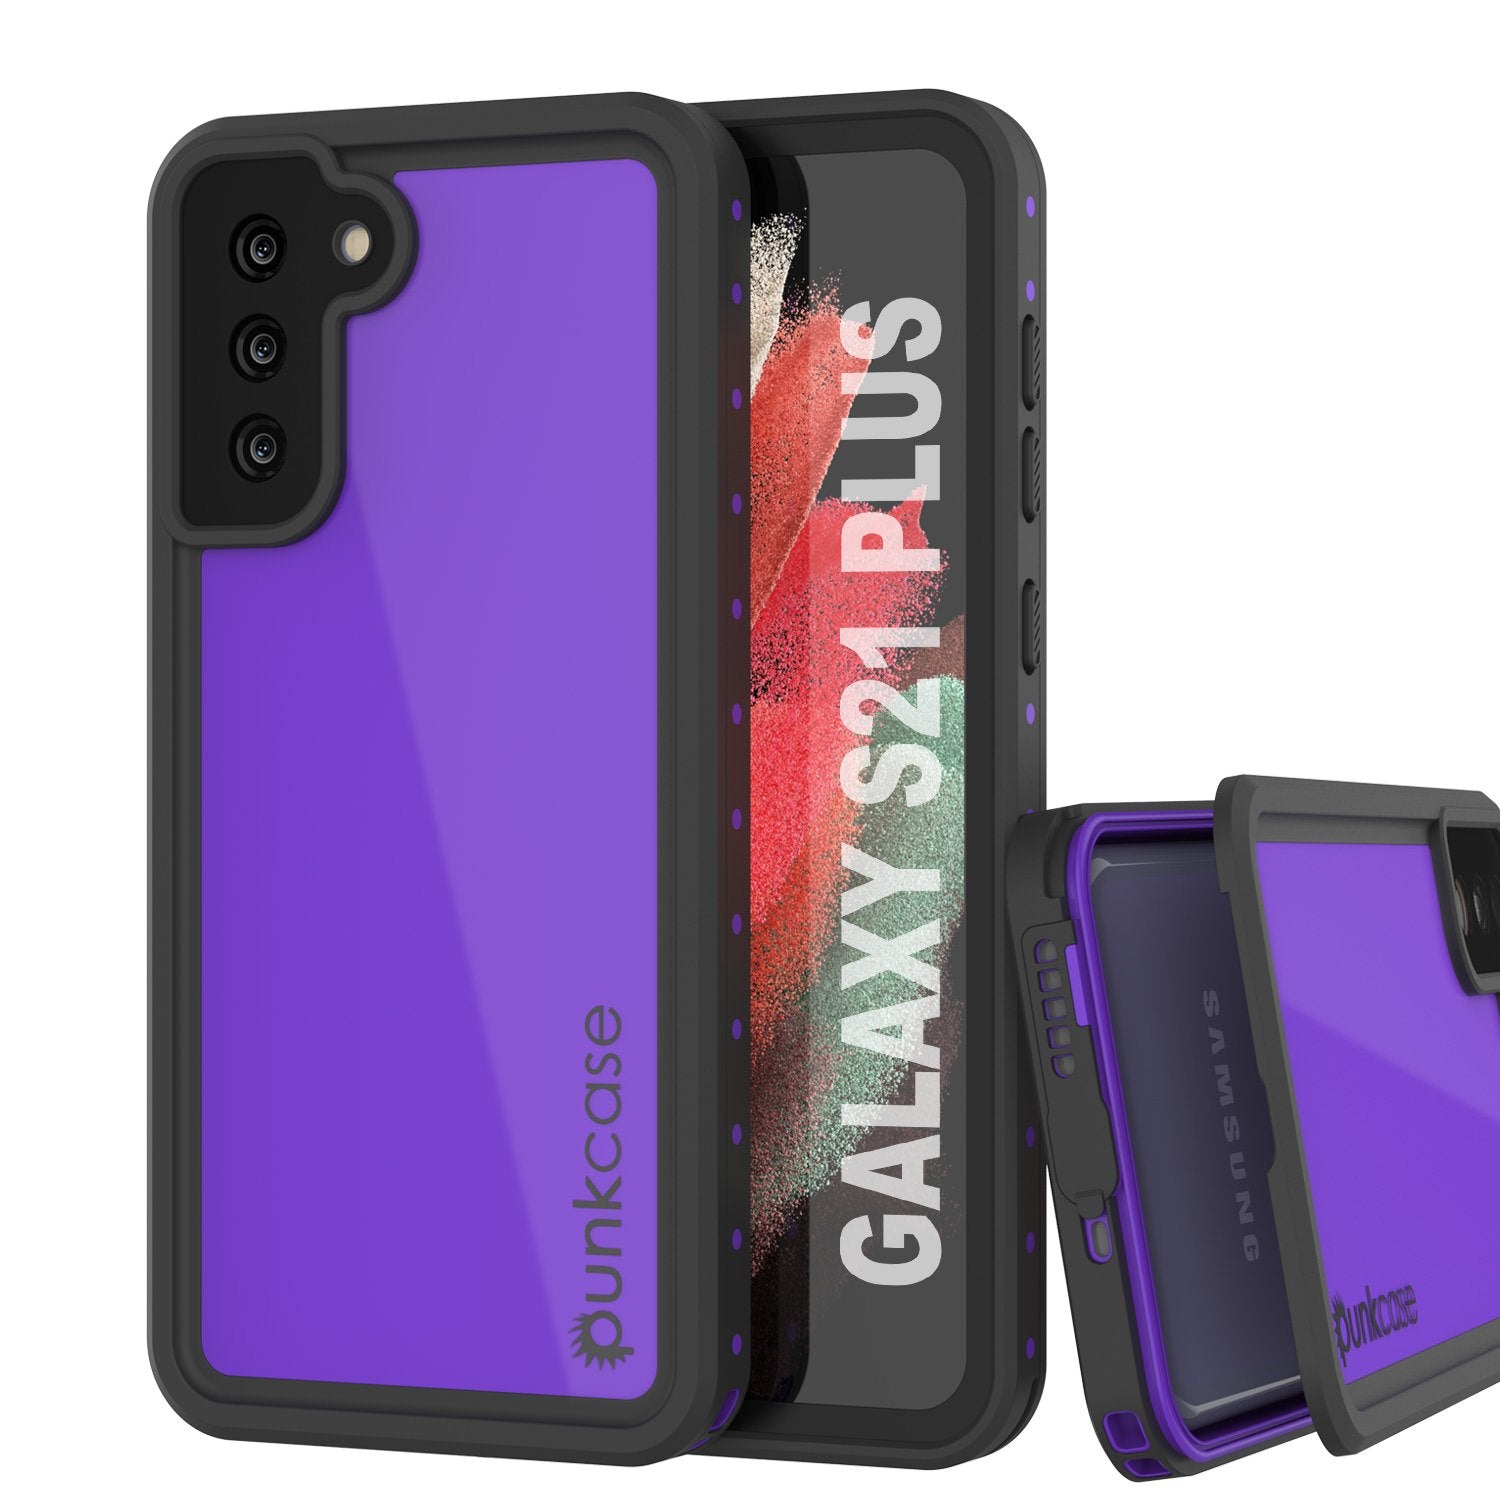 Galaxy S21+ Plus Waterproof Case PunkCase StudStar Purple Thin 6.6ft Underwater IP68 Shock/Snow Proof (Color in image: purple)